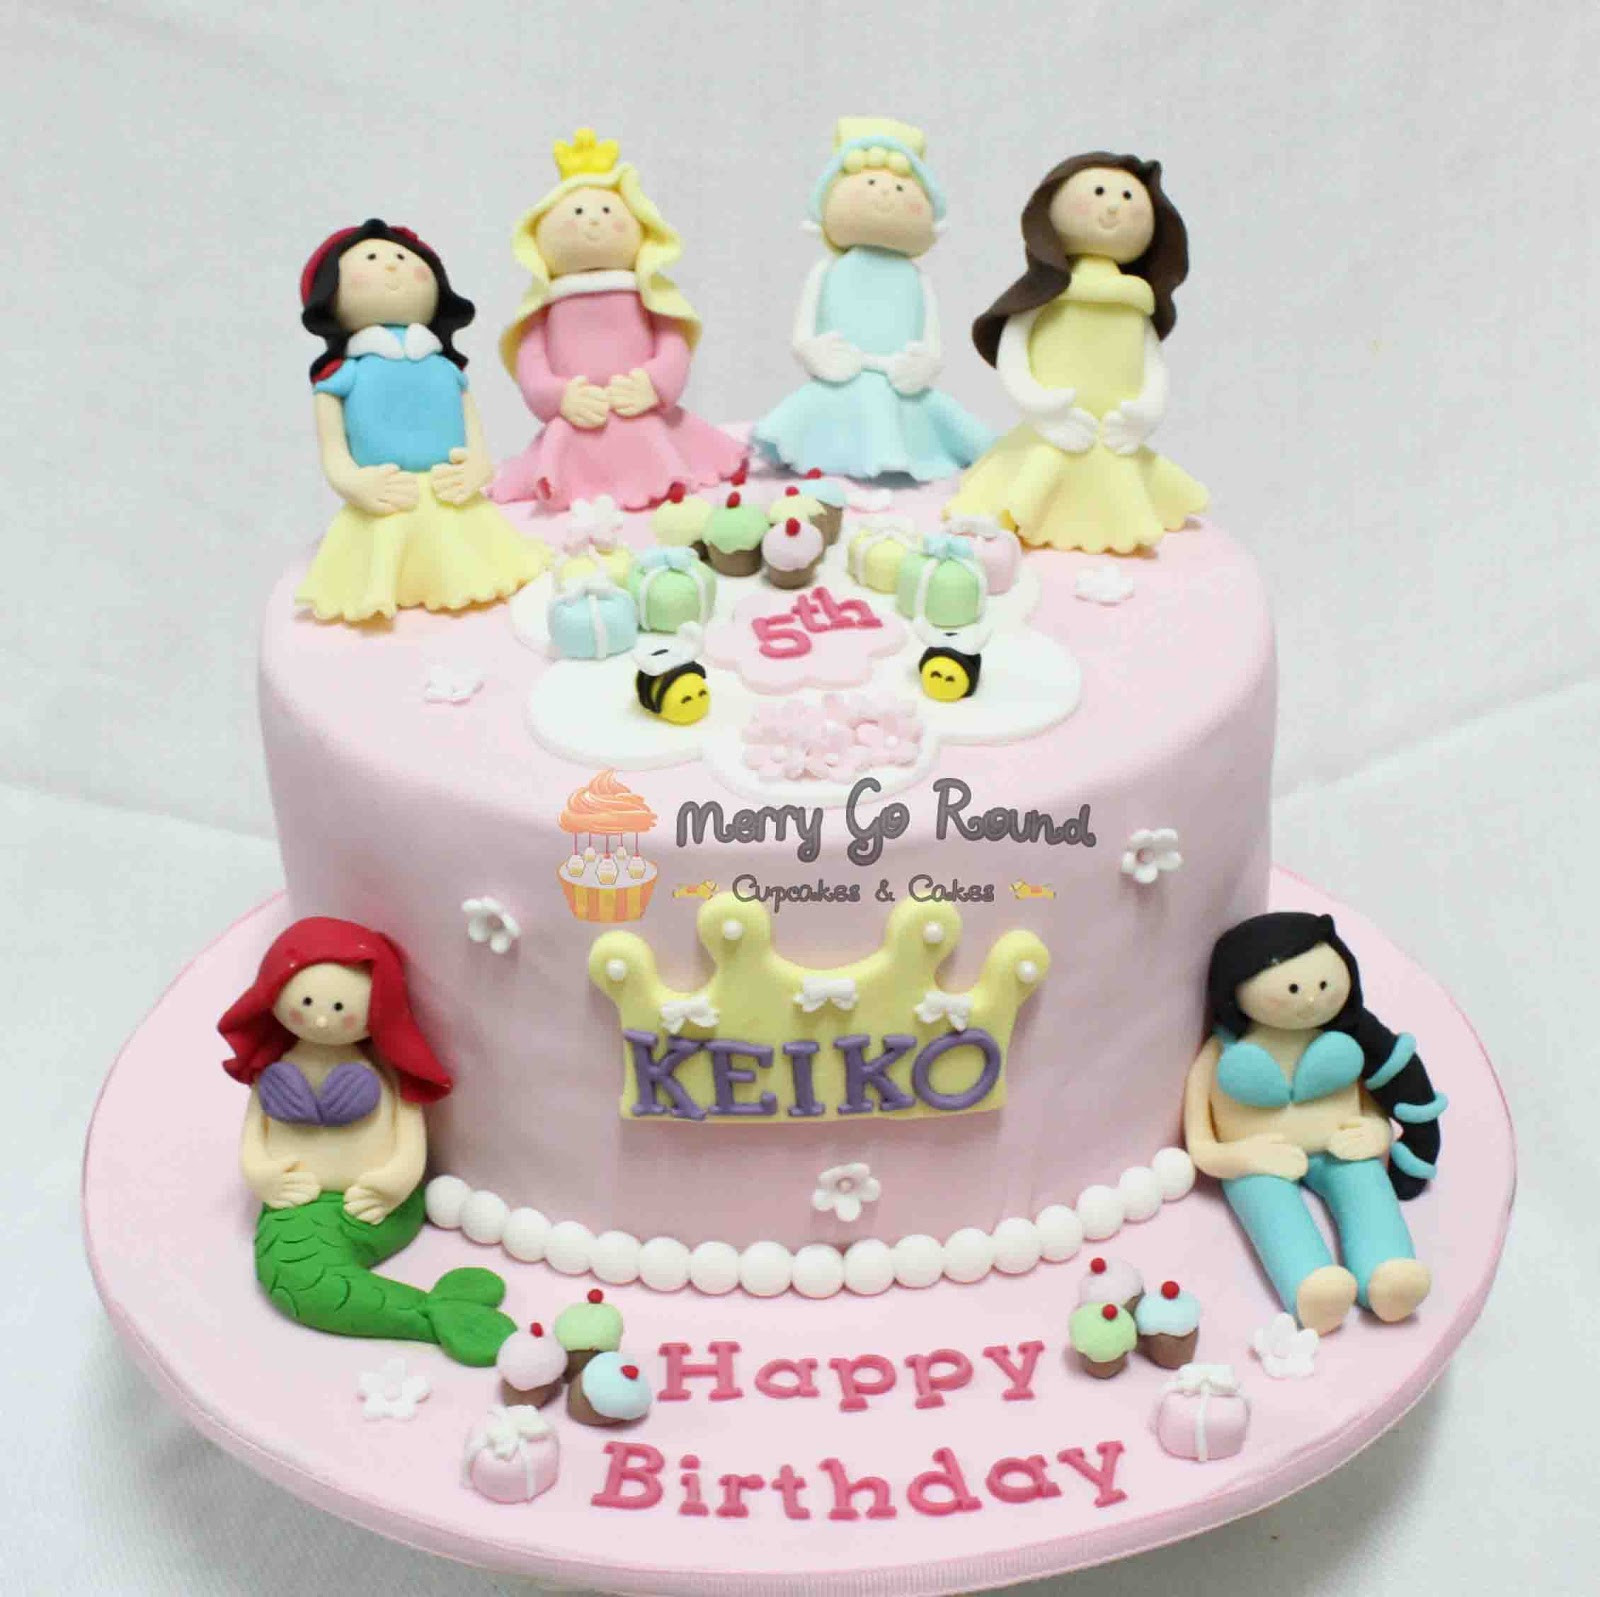 Best ideas about Disney Princess Birthday Cake
. Save or Pin Merry Go Round Cupcakes & Cakes Disney Princess Now.